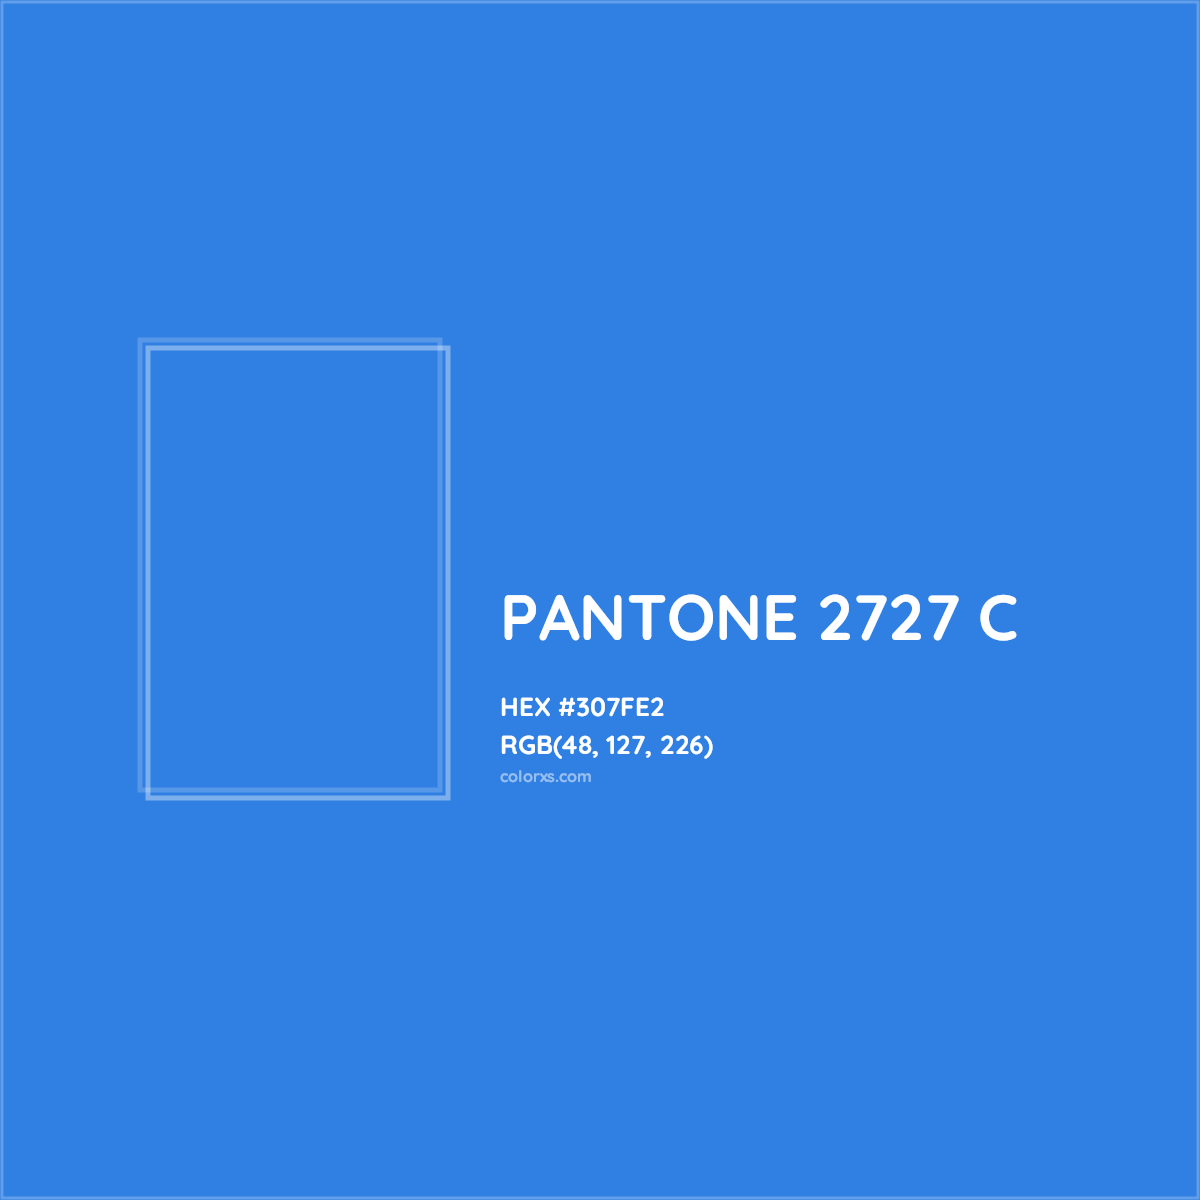 HEX #307FE2 PANTONE 2727 C CMS Pantone PMS - Color Code